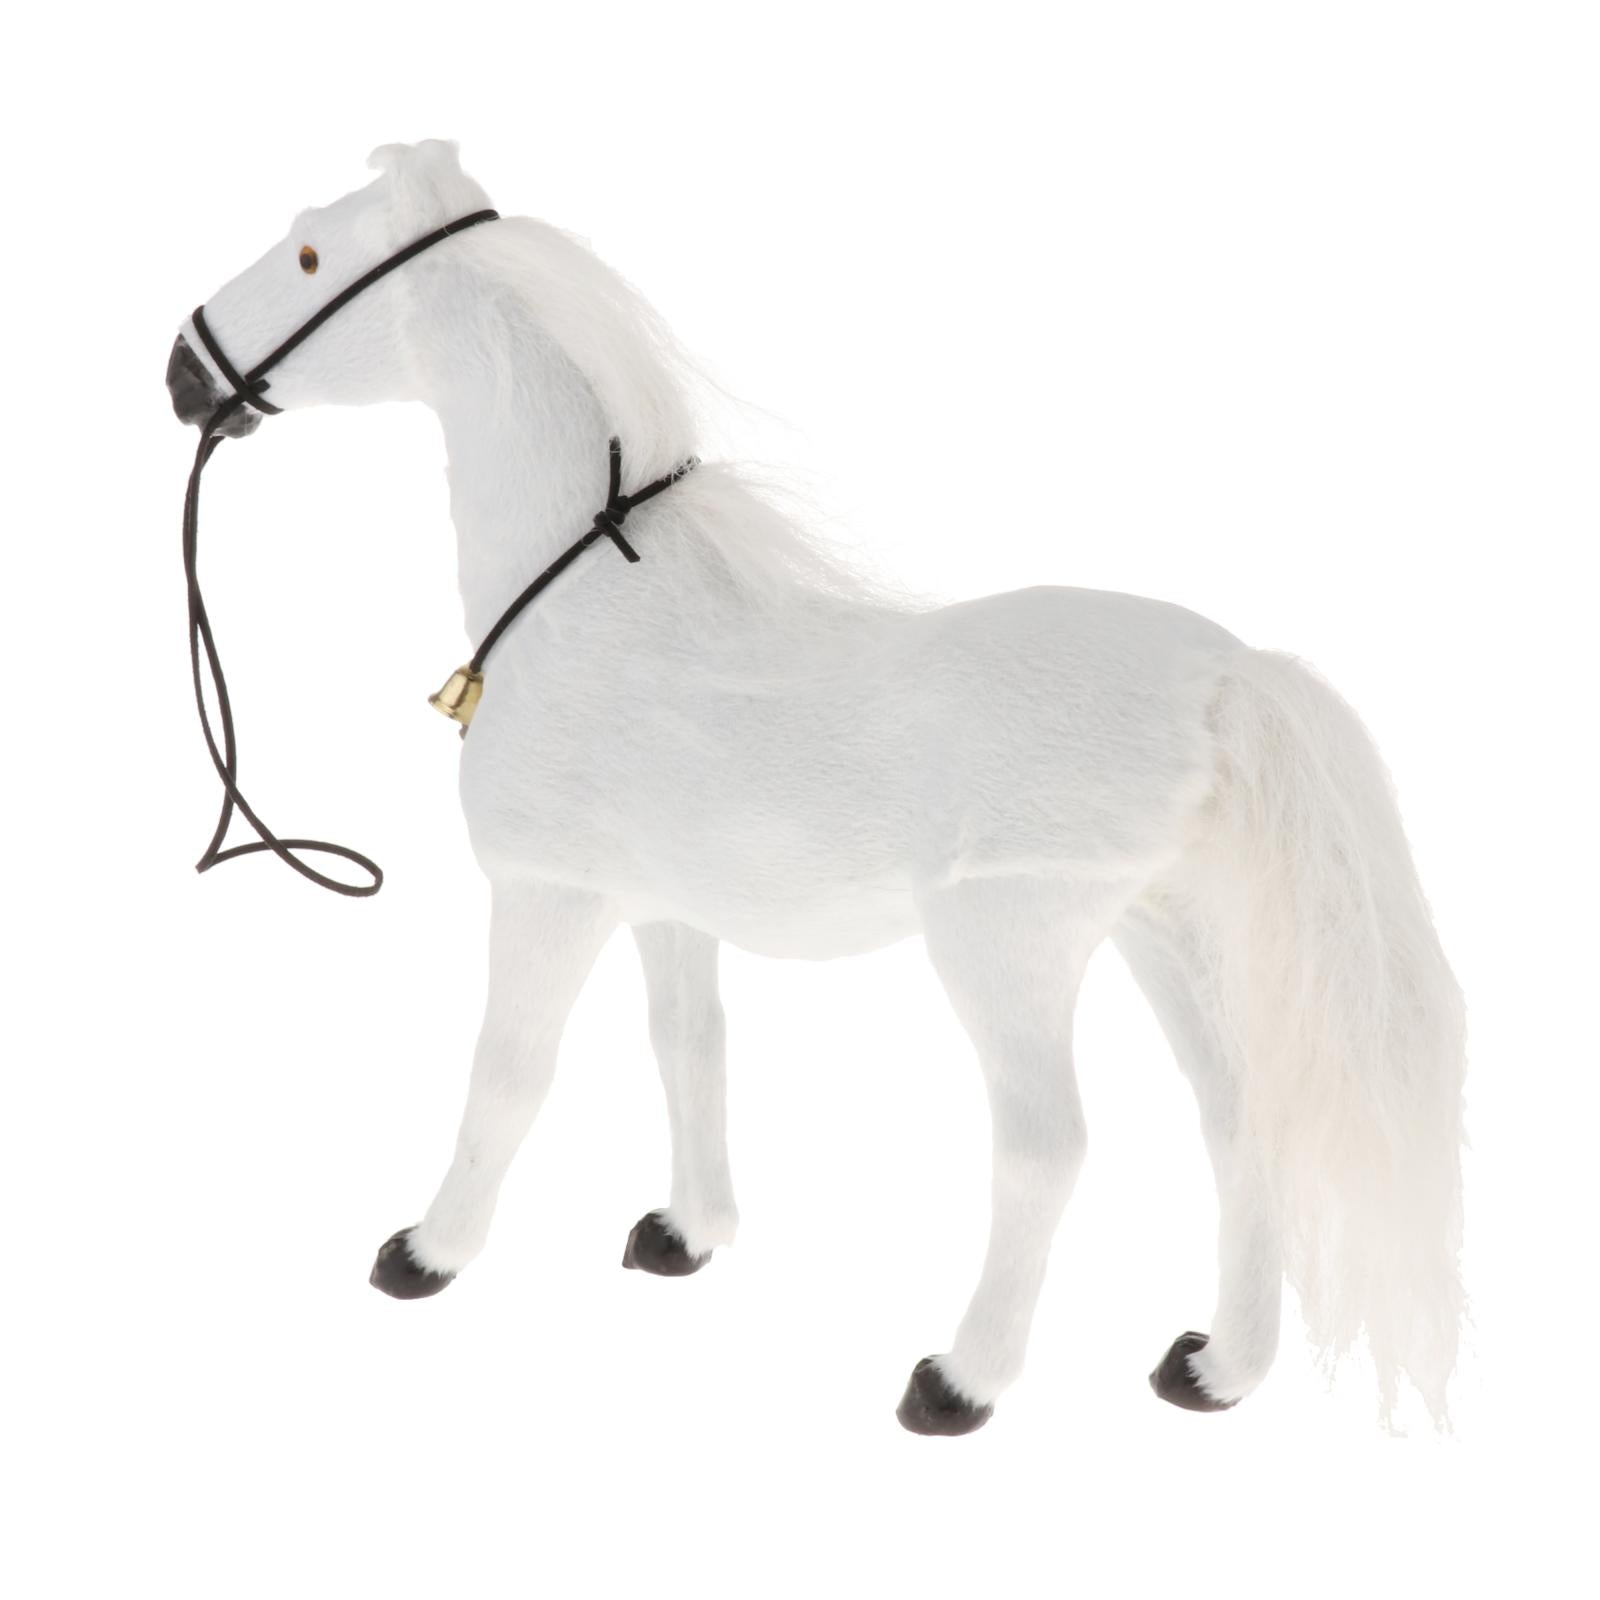 Realistic Horse Model Animal Model Figurine Toy Statue Ornament White